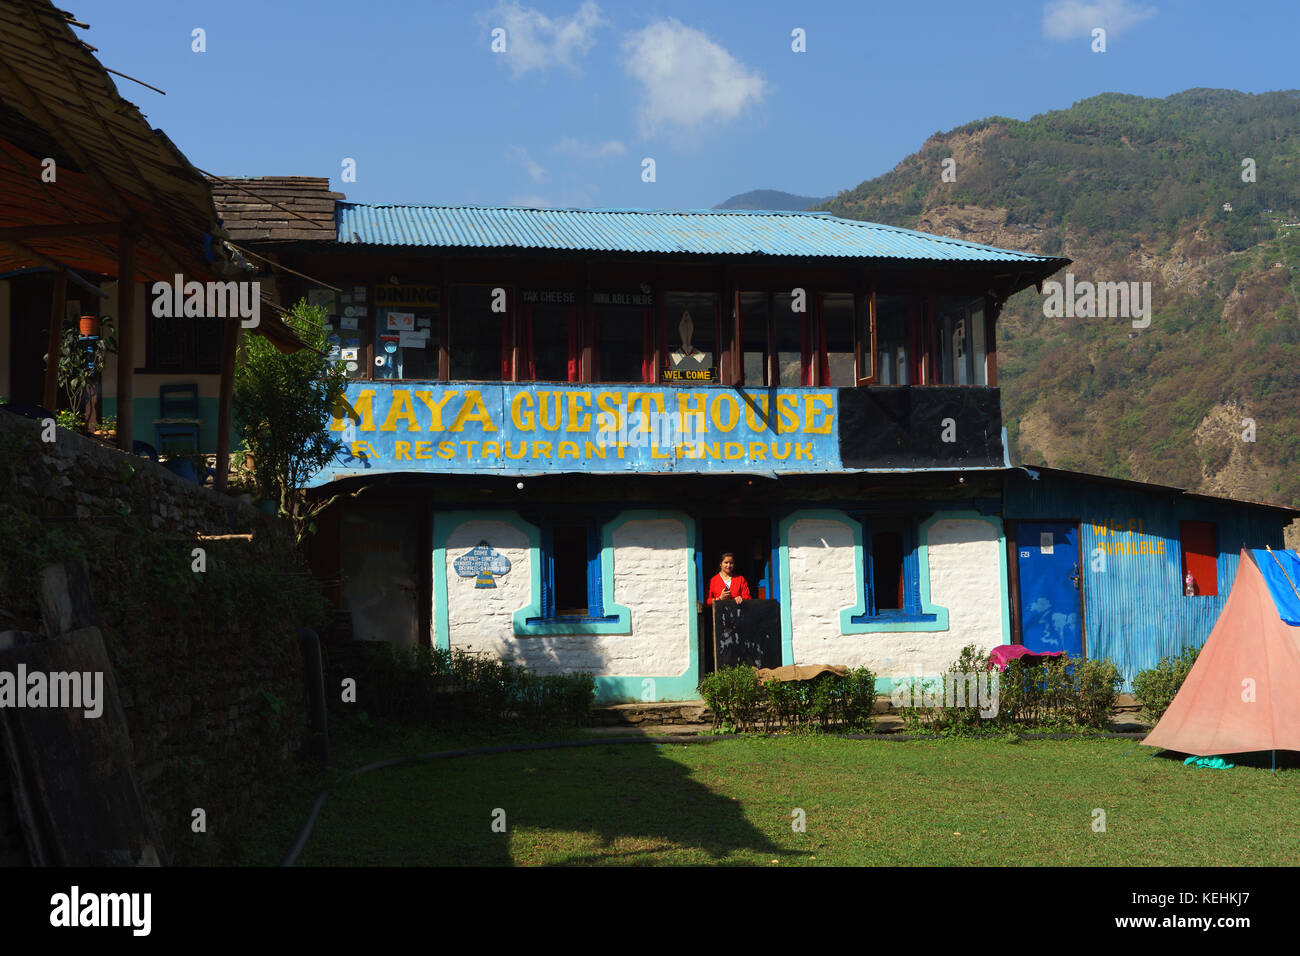 Maya guest house and restaurant, Landruk, Nepal. Stock Photo